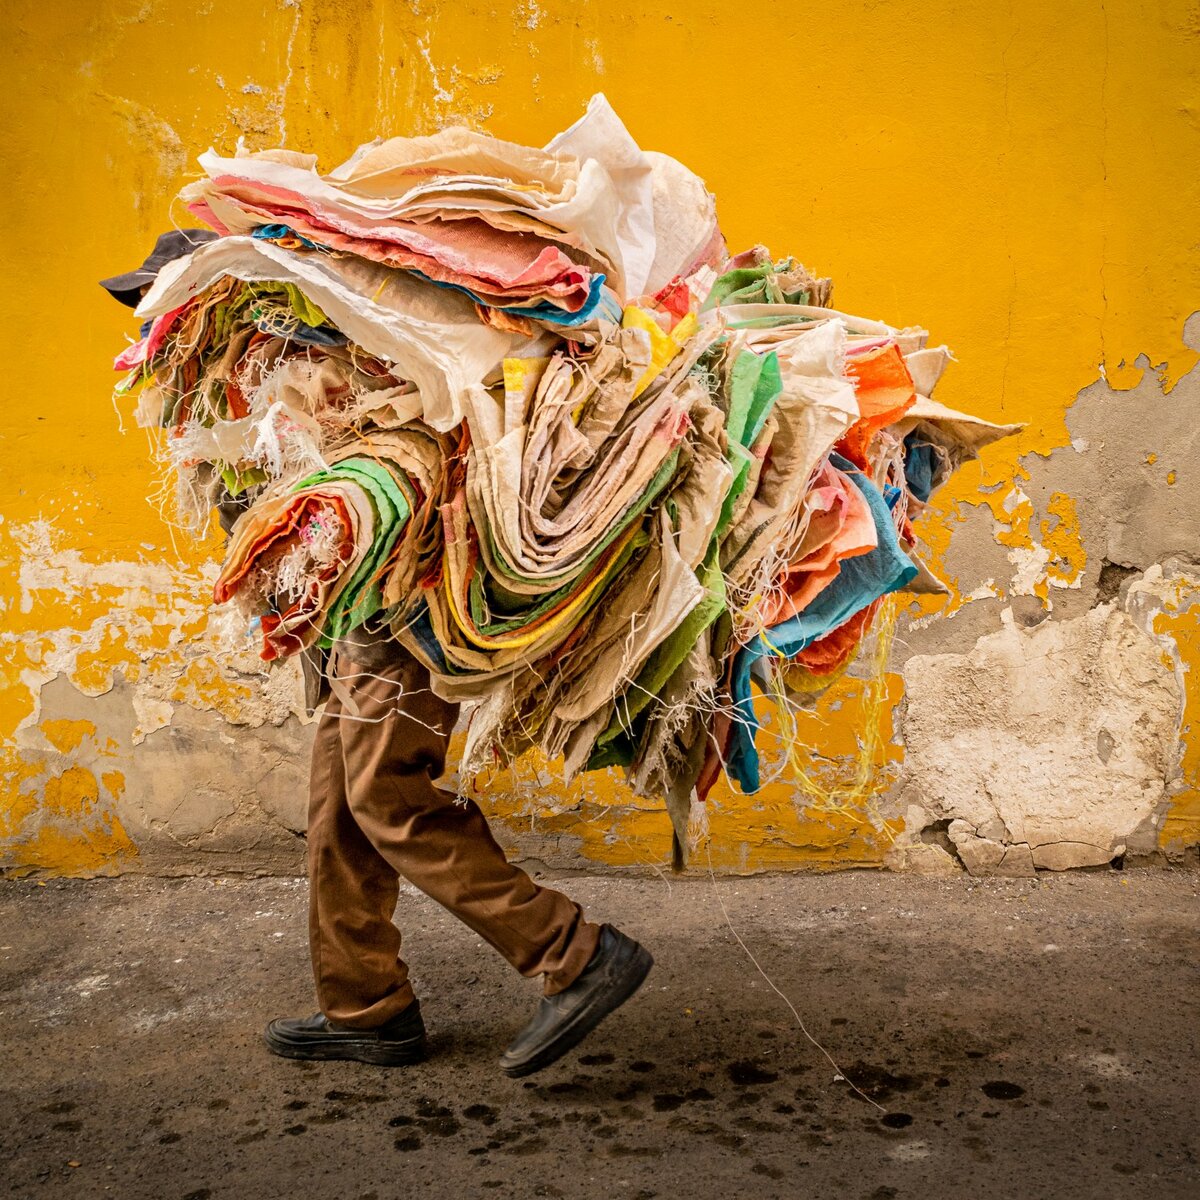 © Seyed Ali (Иран) «Старик собирает сумки».
Шорт-лист в категории «Стрит-фото» | Sony World Photography Awards 2022